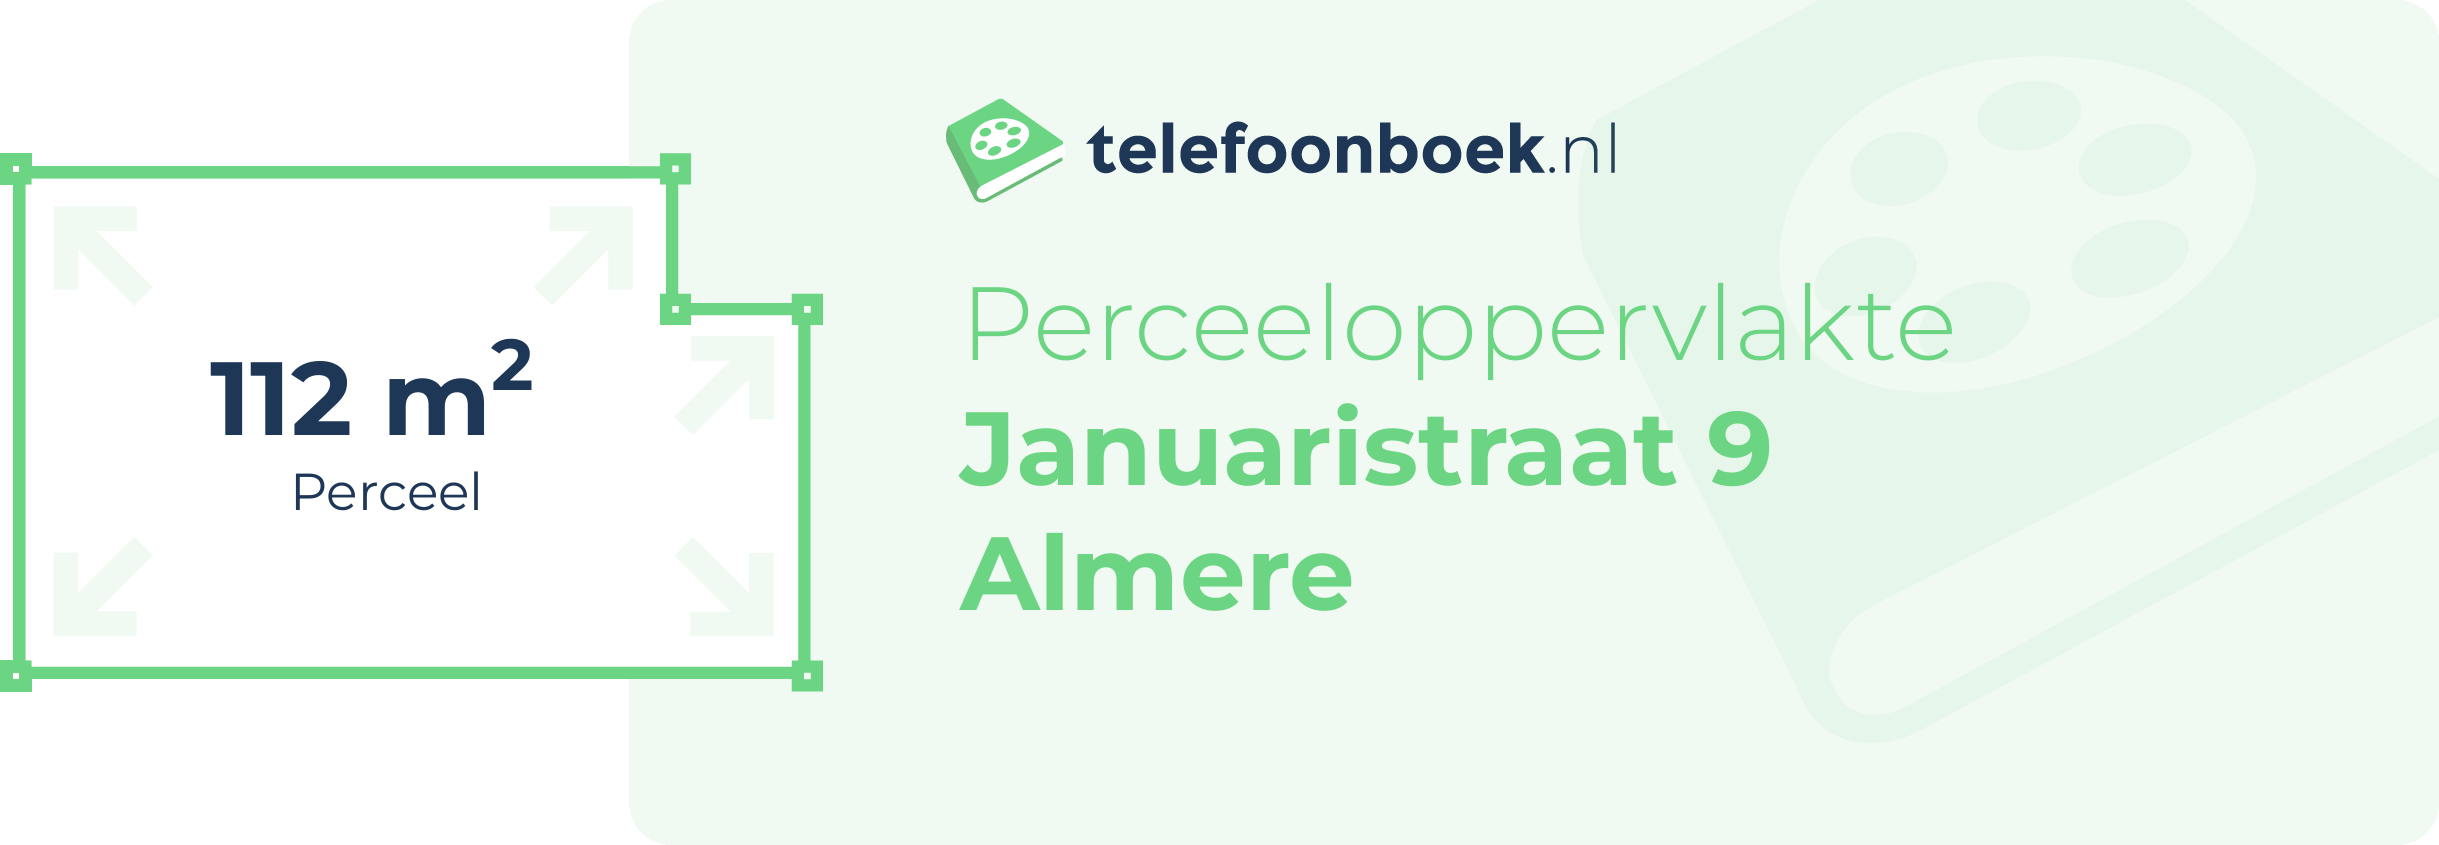 Perceeloppervlakte Januaristraat 9 Almere